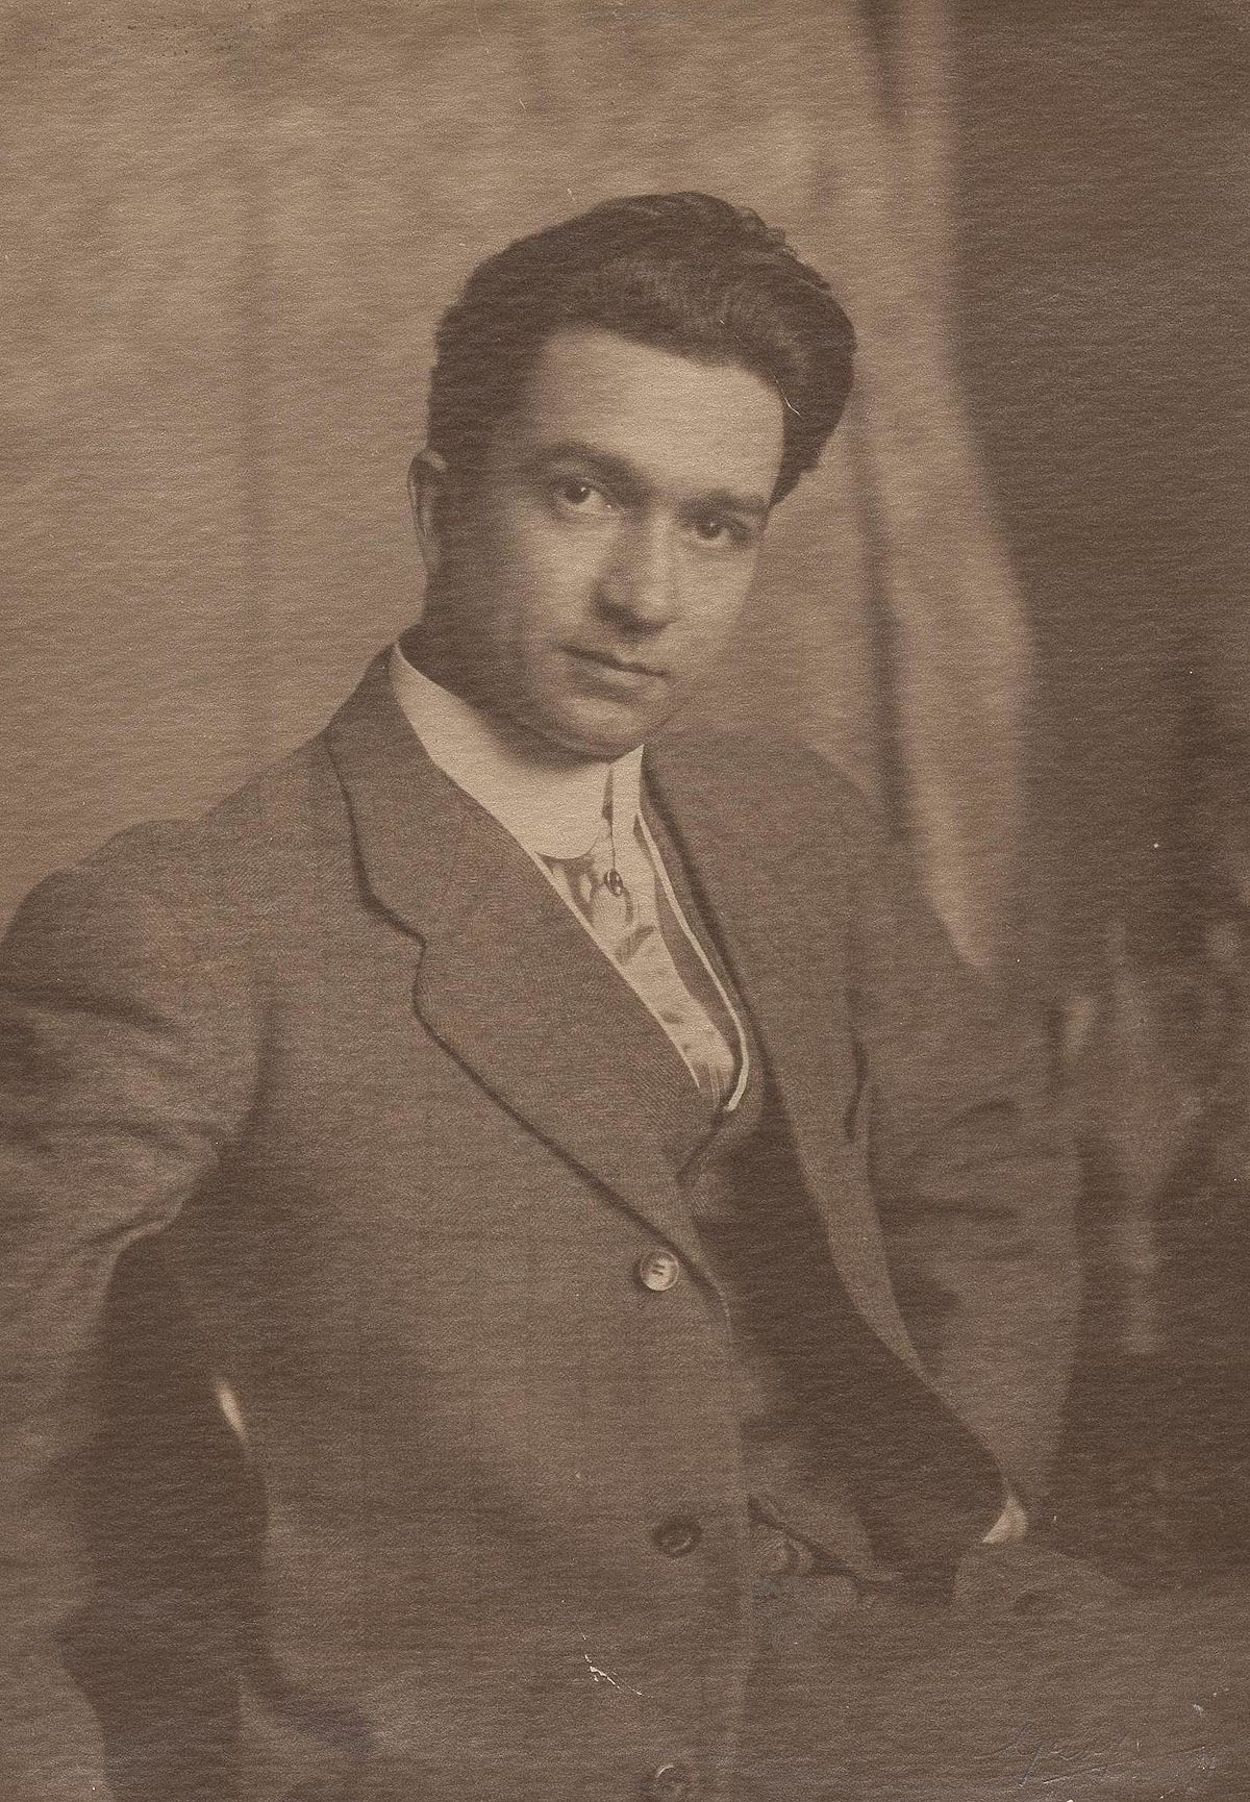 F. Luis Mora - July 27, 1874 - June 5, 1940